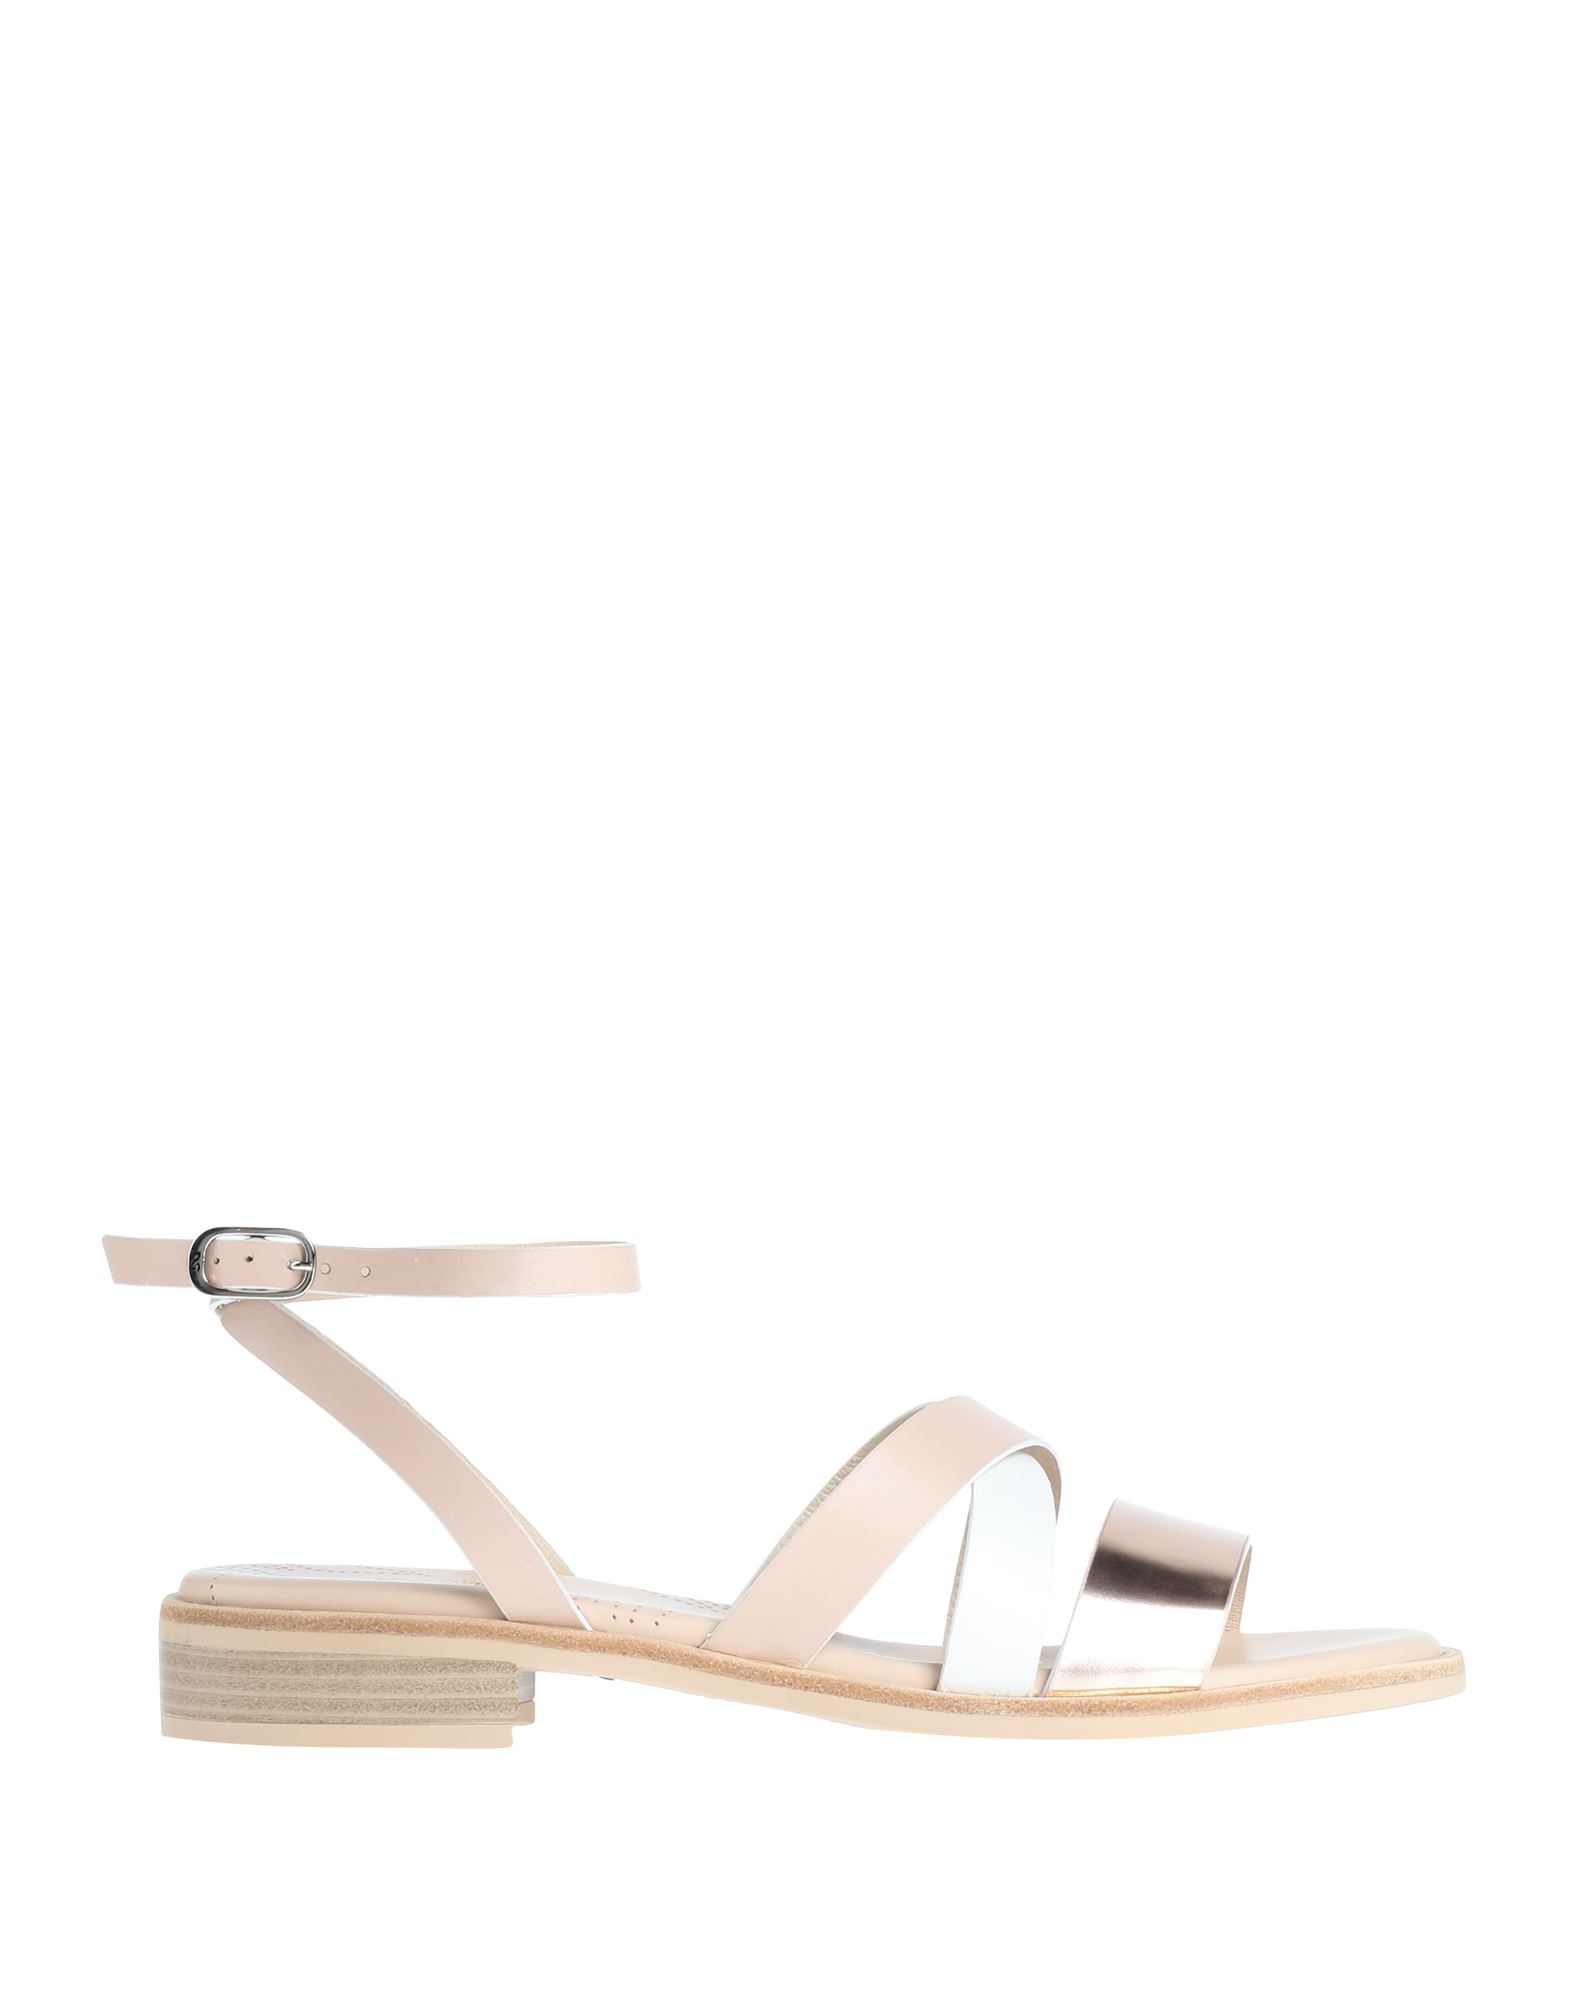 Nero Giardini Sandals In Rose Gold | ModeSens